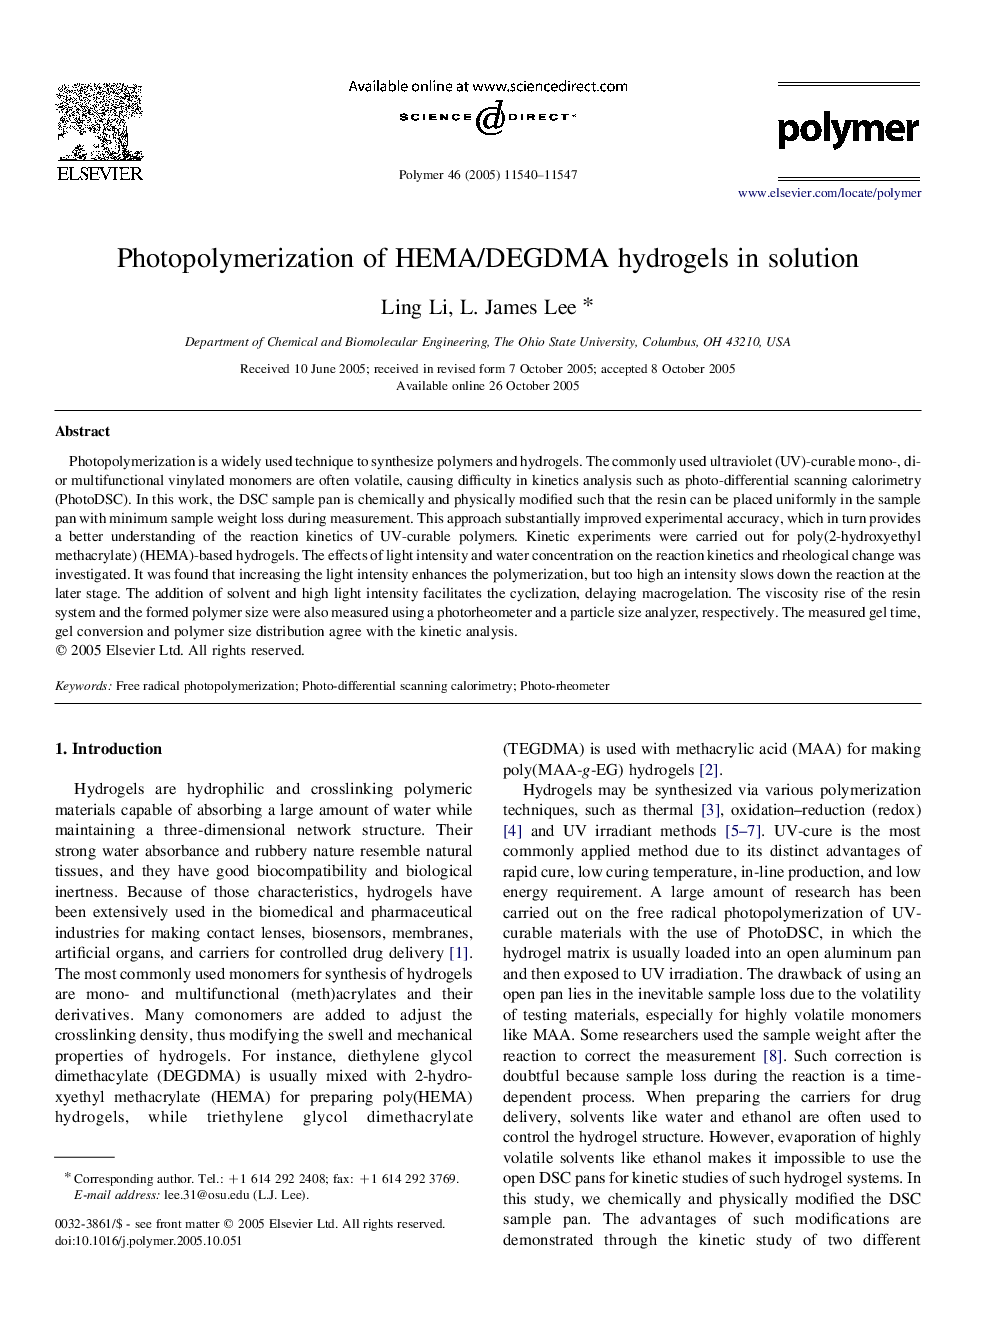 Photopolymerization of HEMA/DEGDMA hydrogels in solution